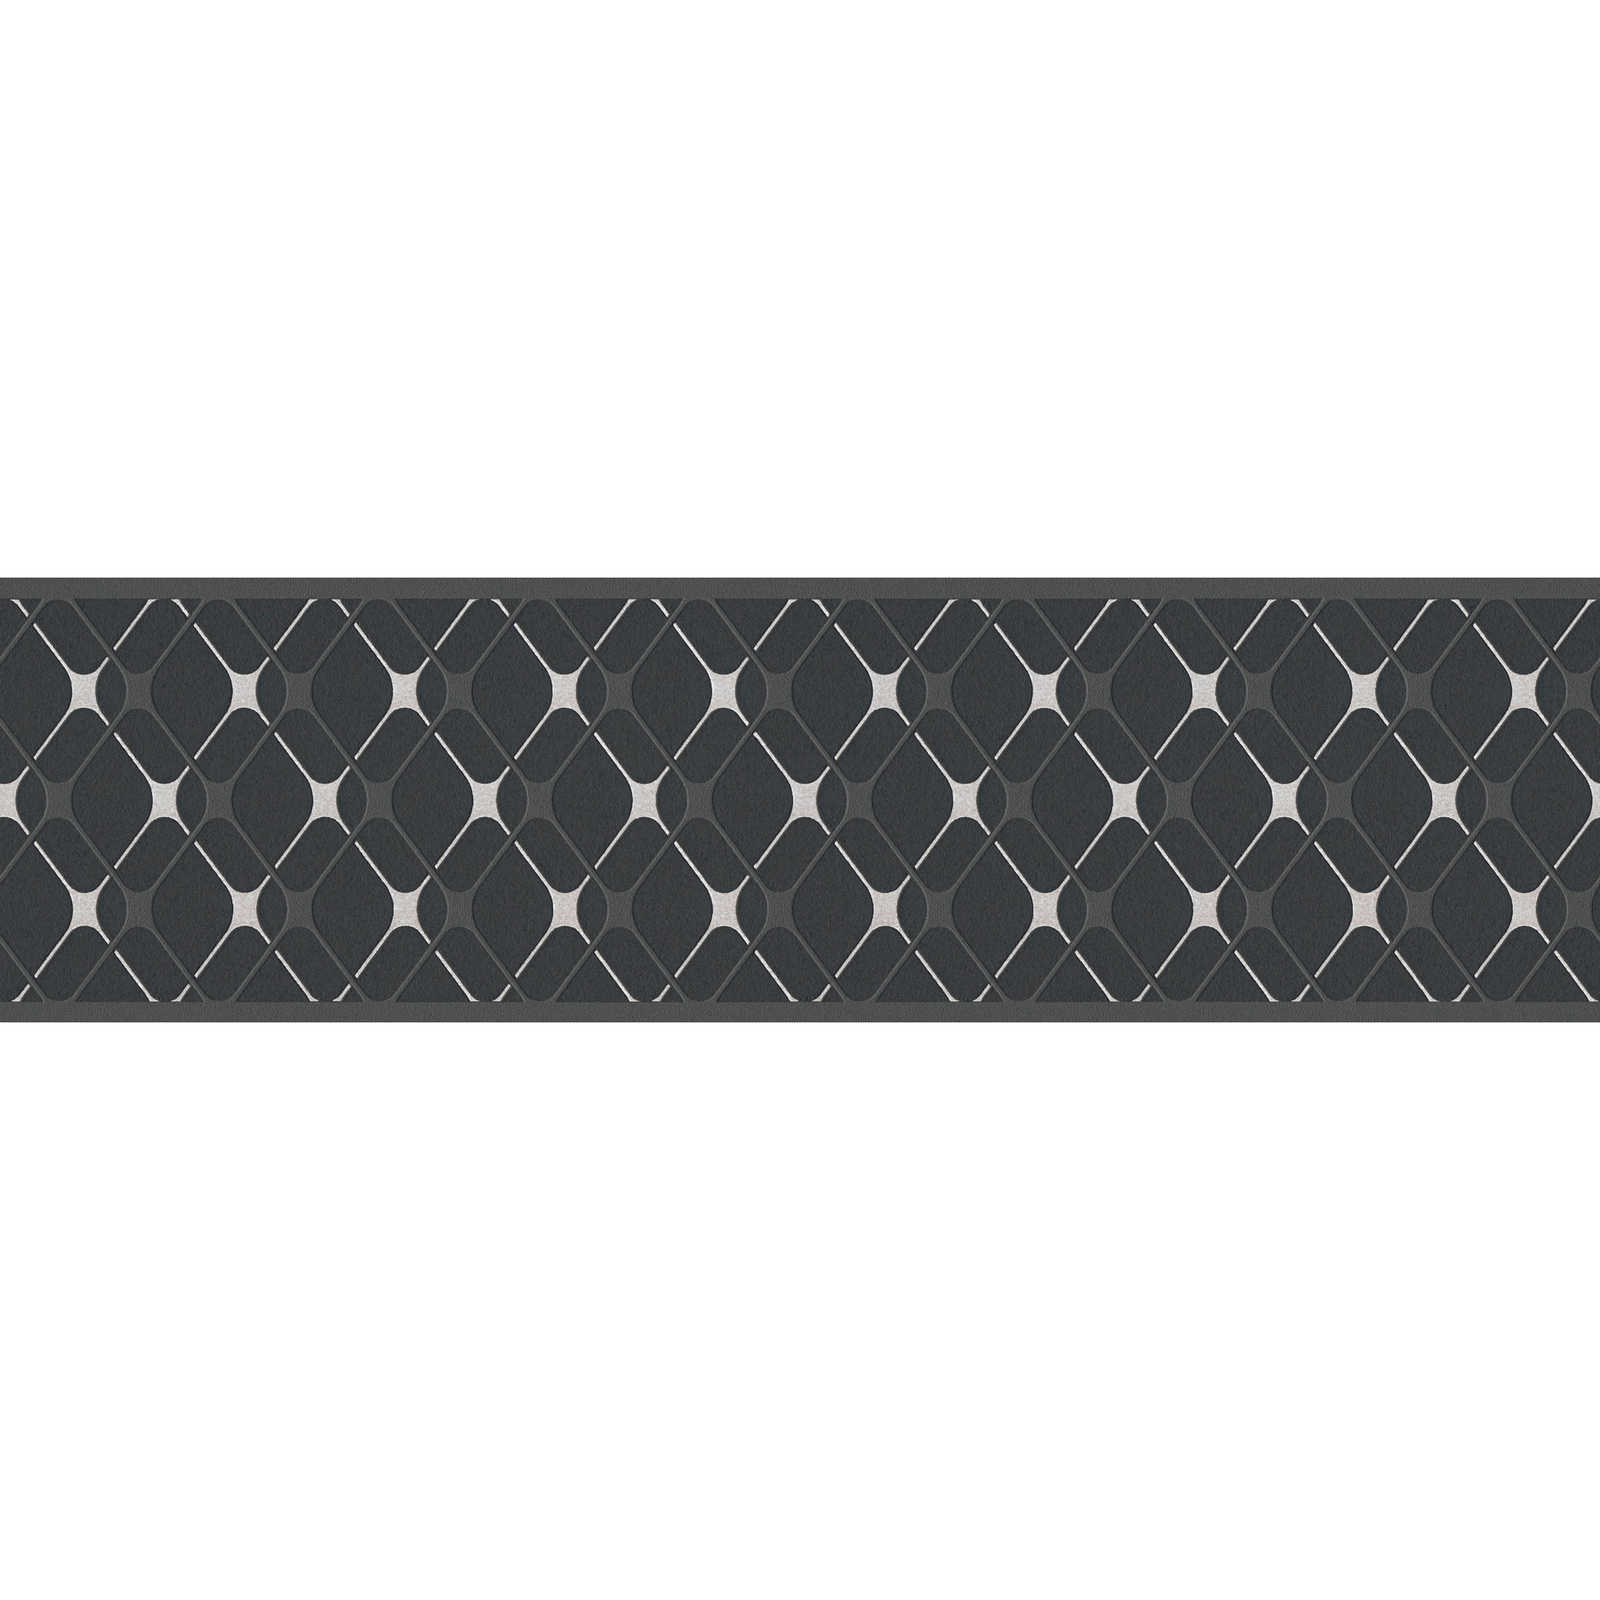         Self-adhesive wallpaper border with diamond pattern - black, white
    